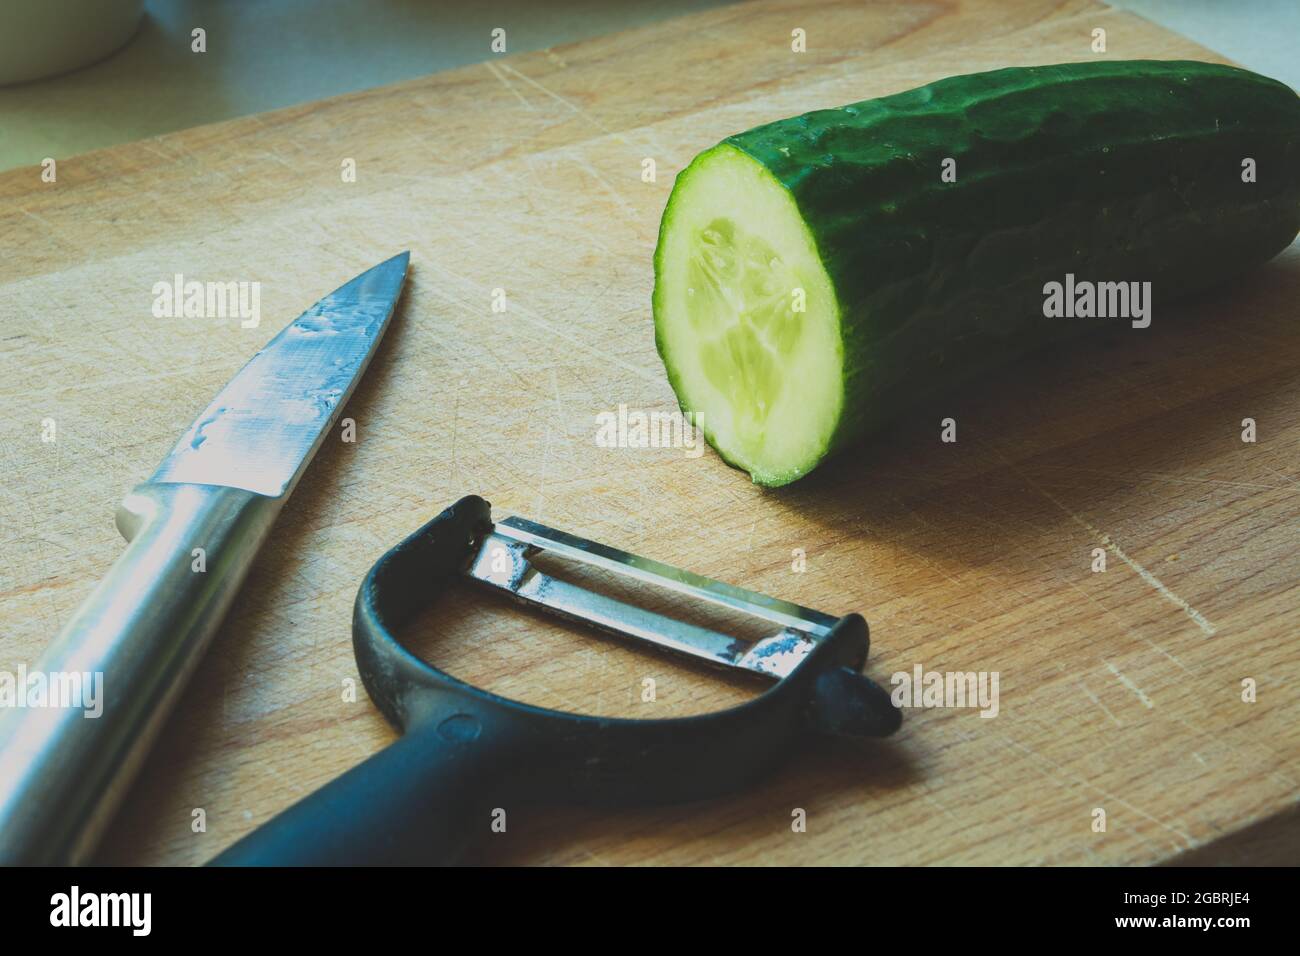 9+ Hundred Cucumber Peeler Royalty-Free Images, Stock Photos